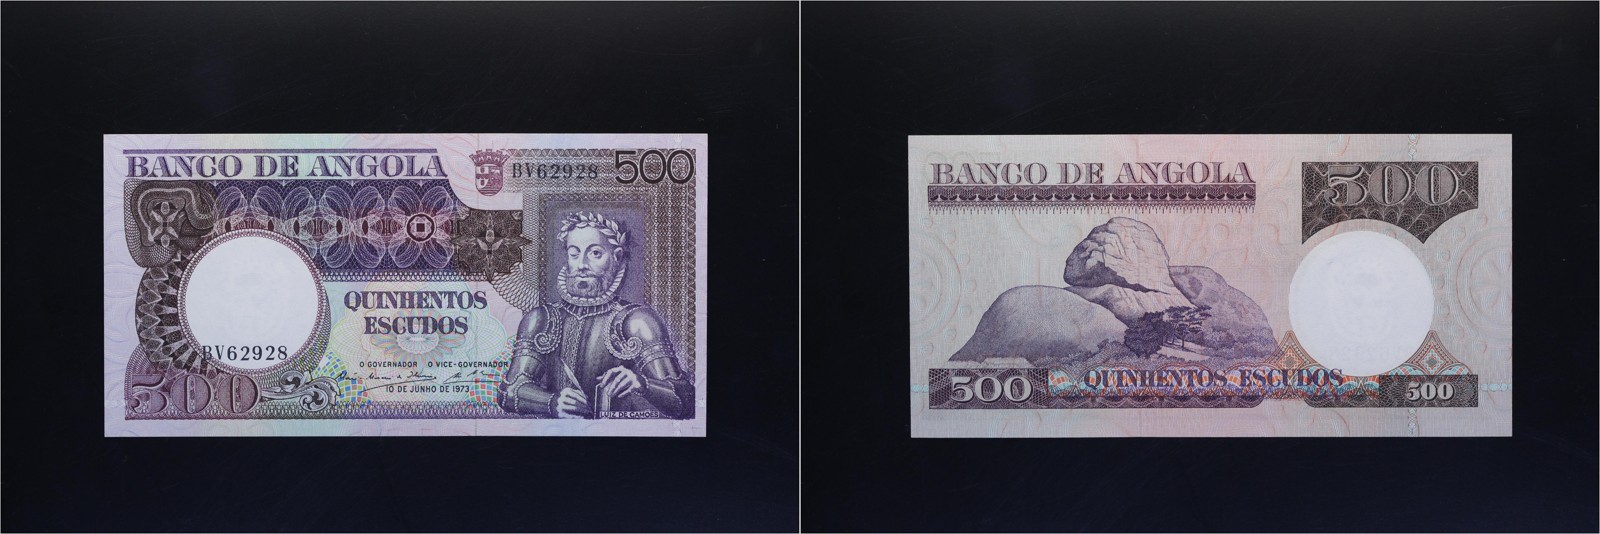 Angola 500 Escudo 1973